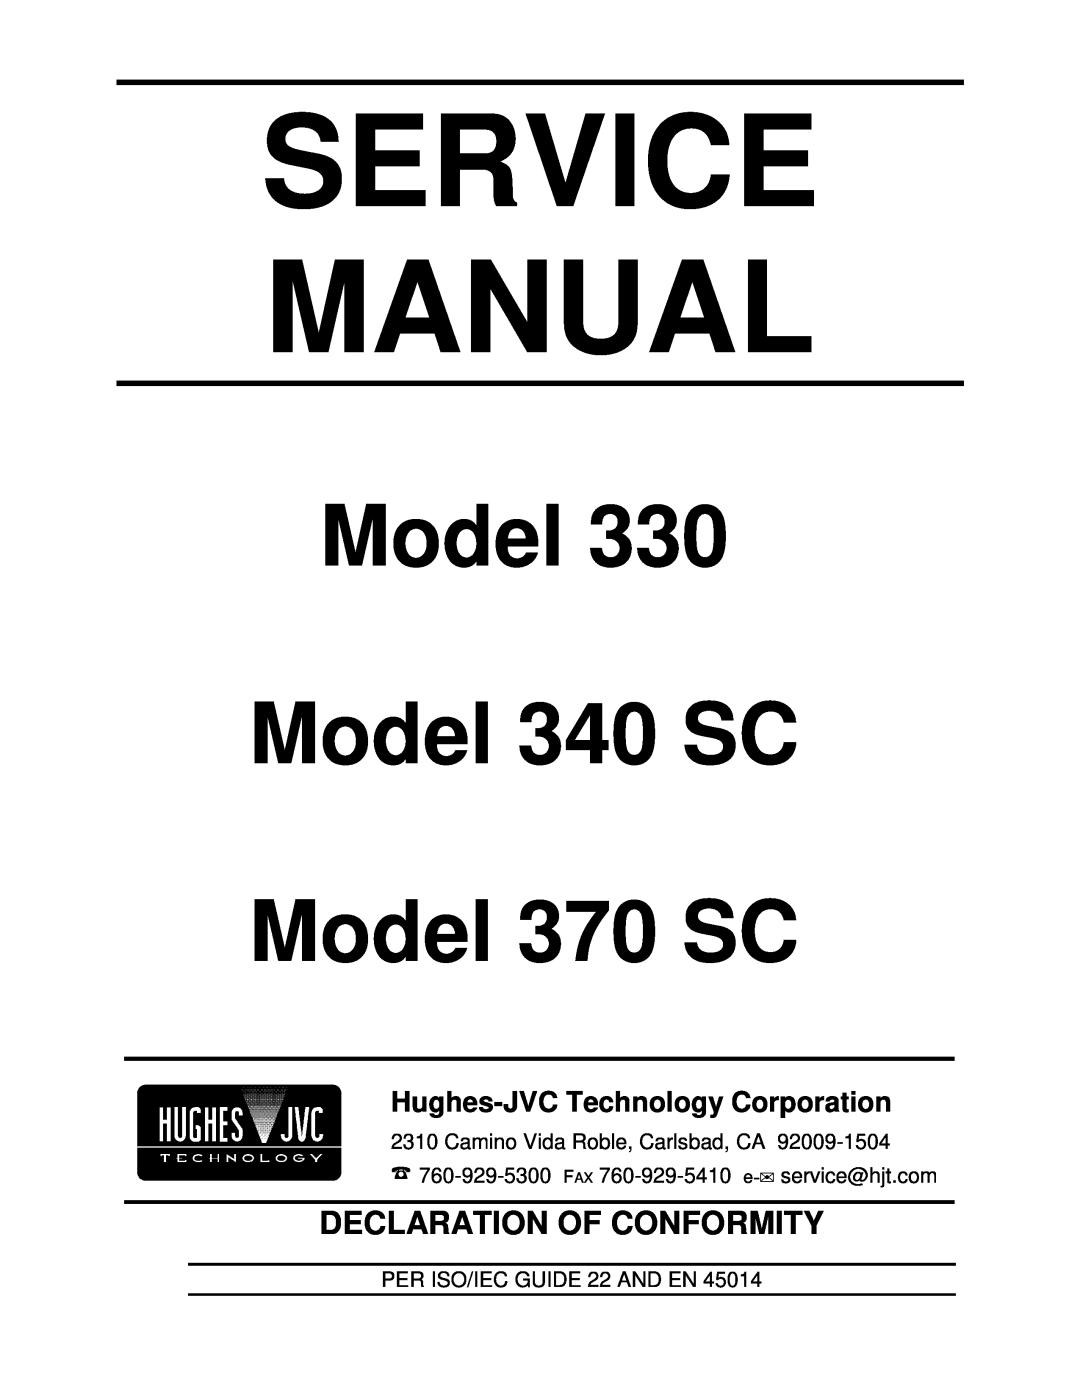 JVC 370 SC, 330, 340 SC service manual Declaration Of Conformity, Hughes-JVC Technology Corporation, Service Manual 